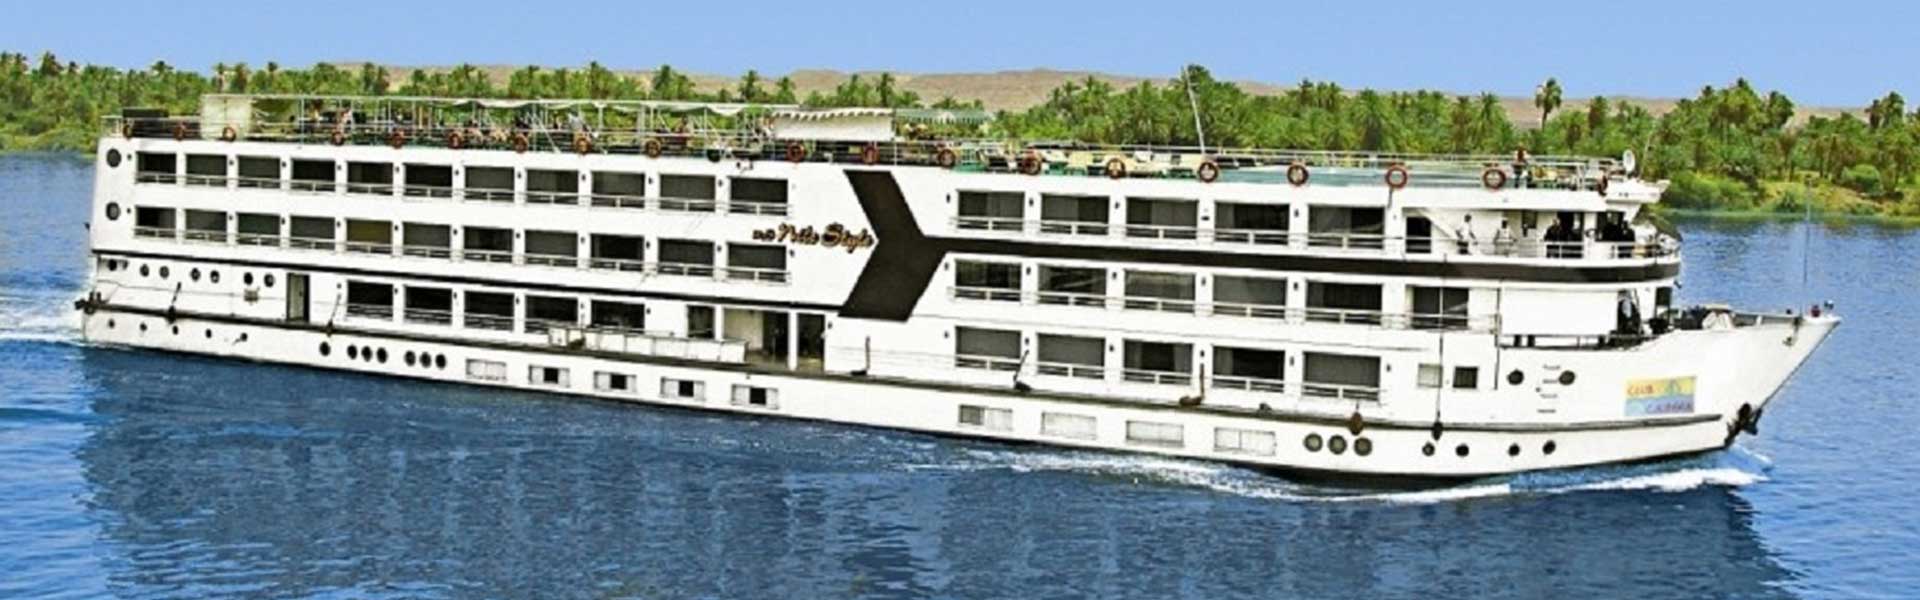 Nile Style Nile Cruise 4 Days from Aswan 